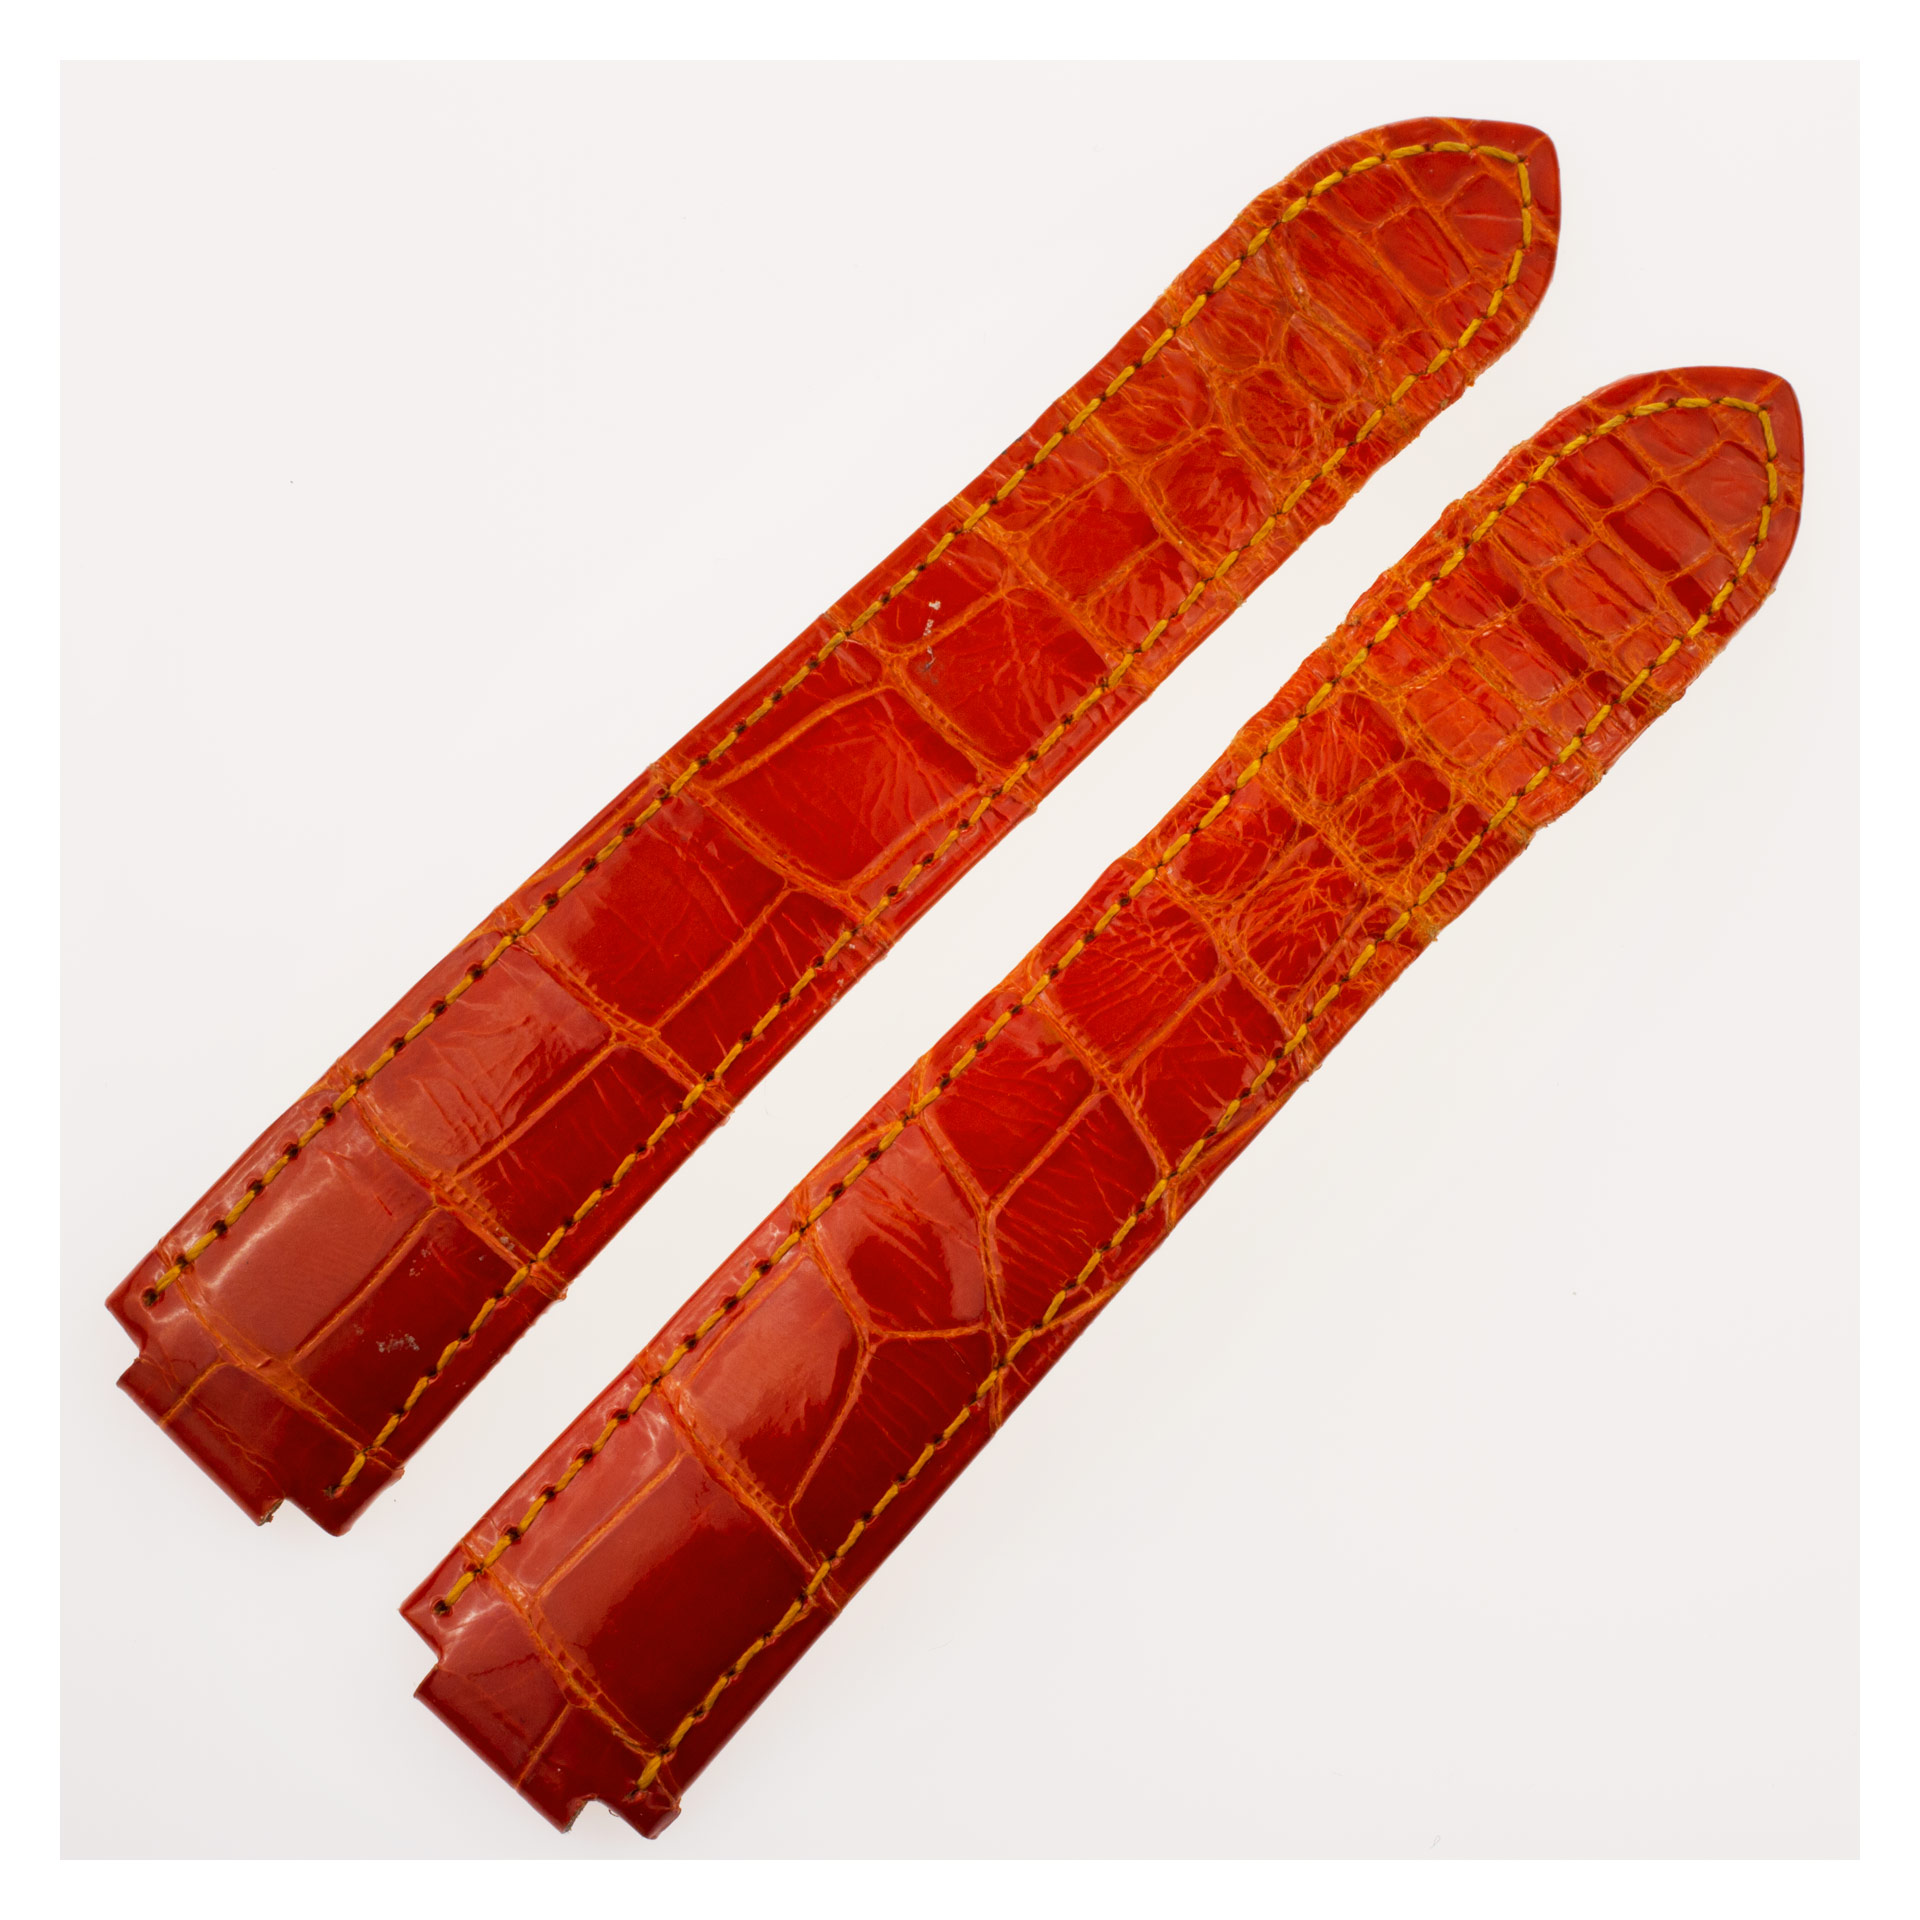 Cartier bright orange alligator strap by 18mm by lug end 4.25" length